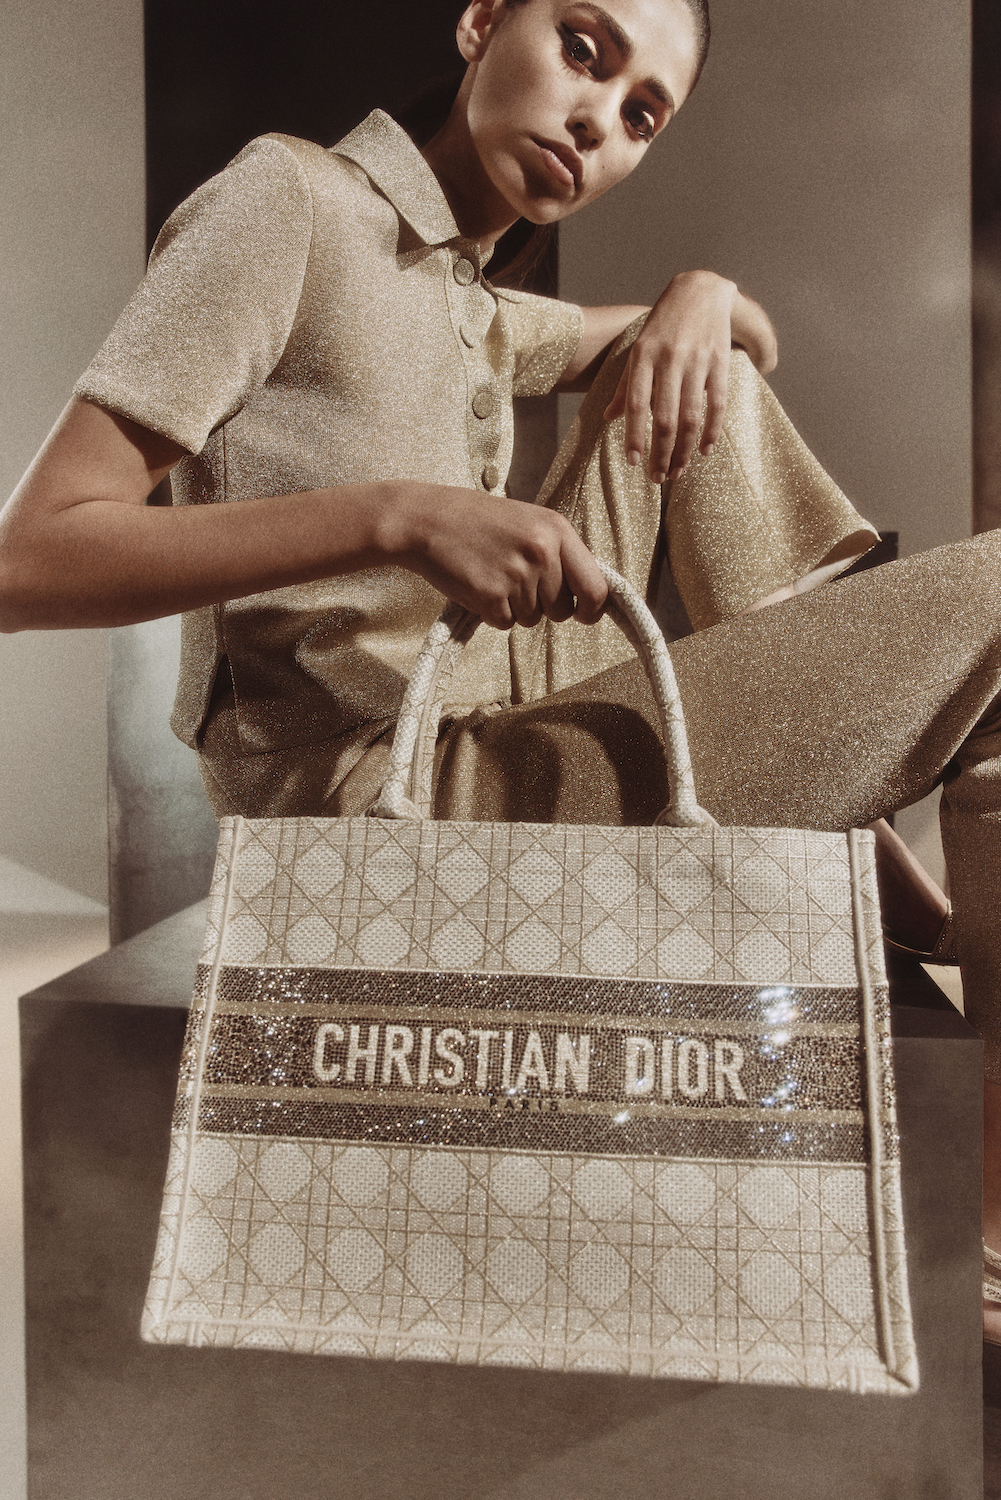  Courtesy of Dior